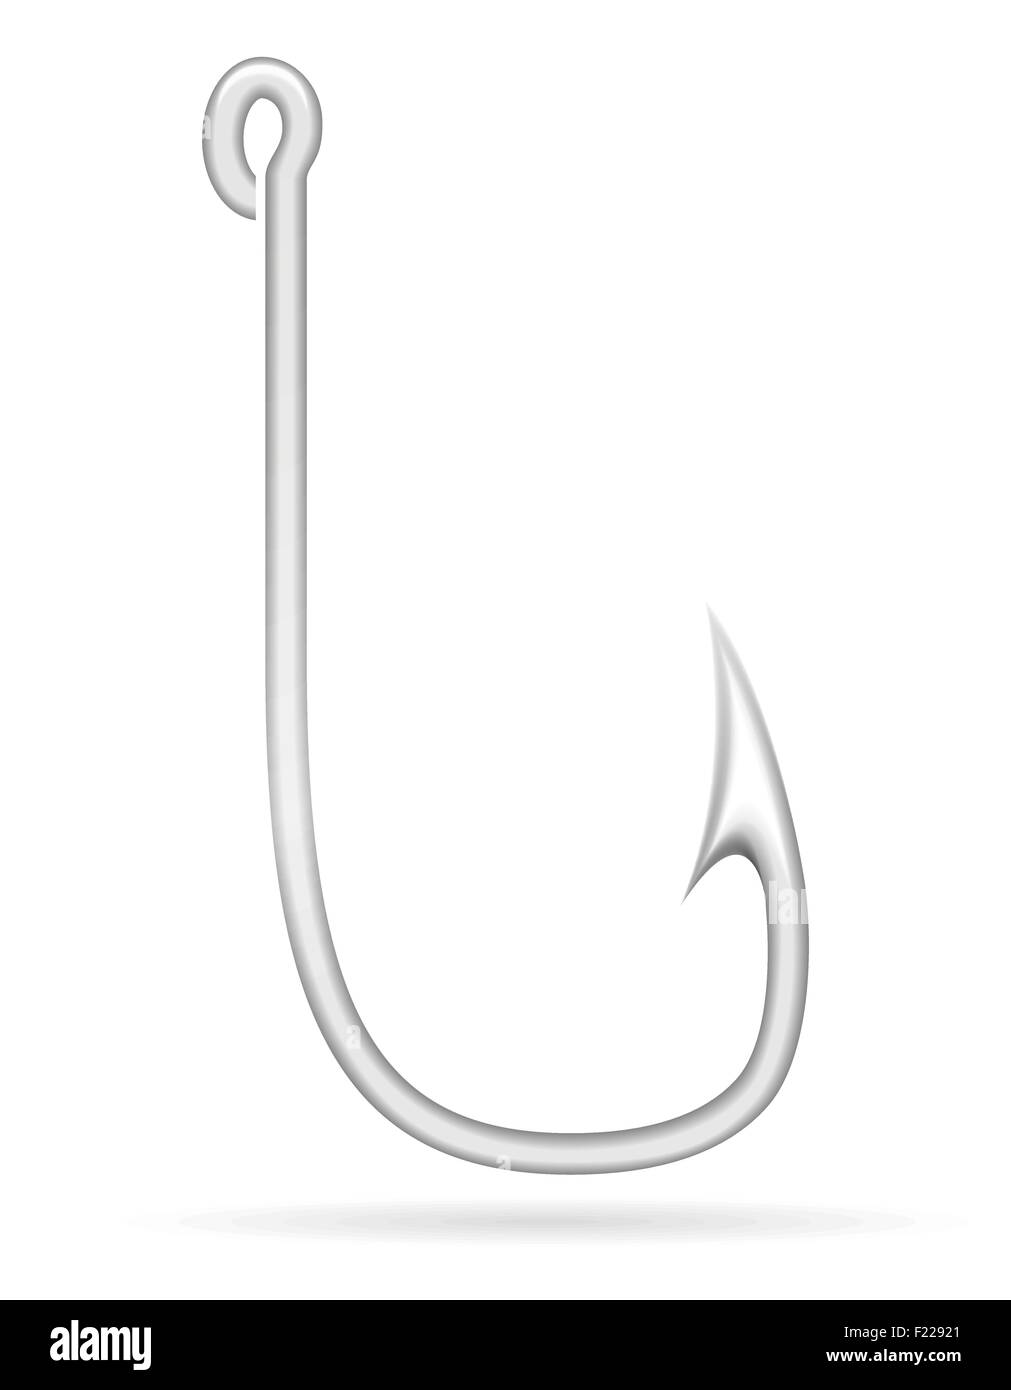 fishhook for fishing vector illustration isolated on white background Stock Vector